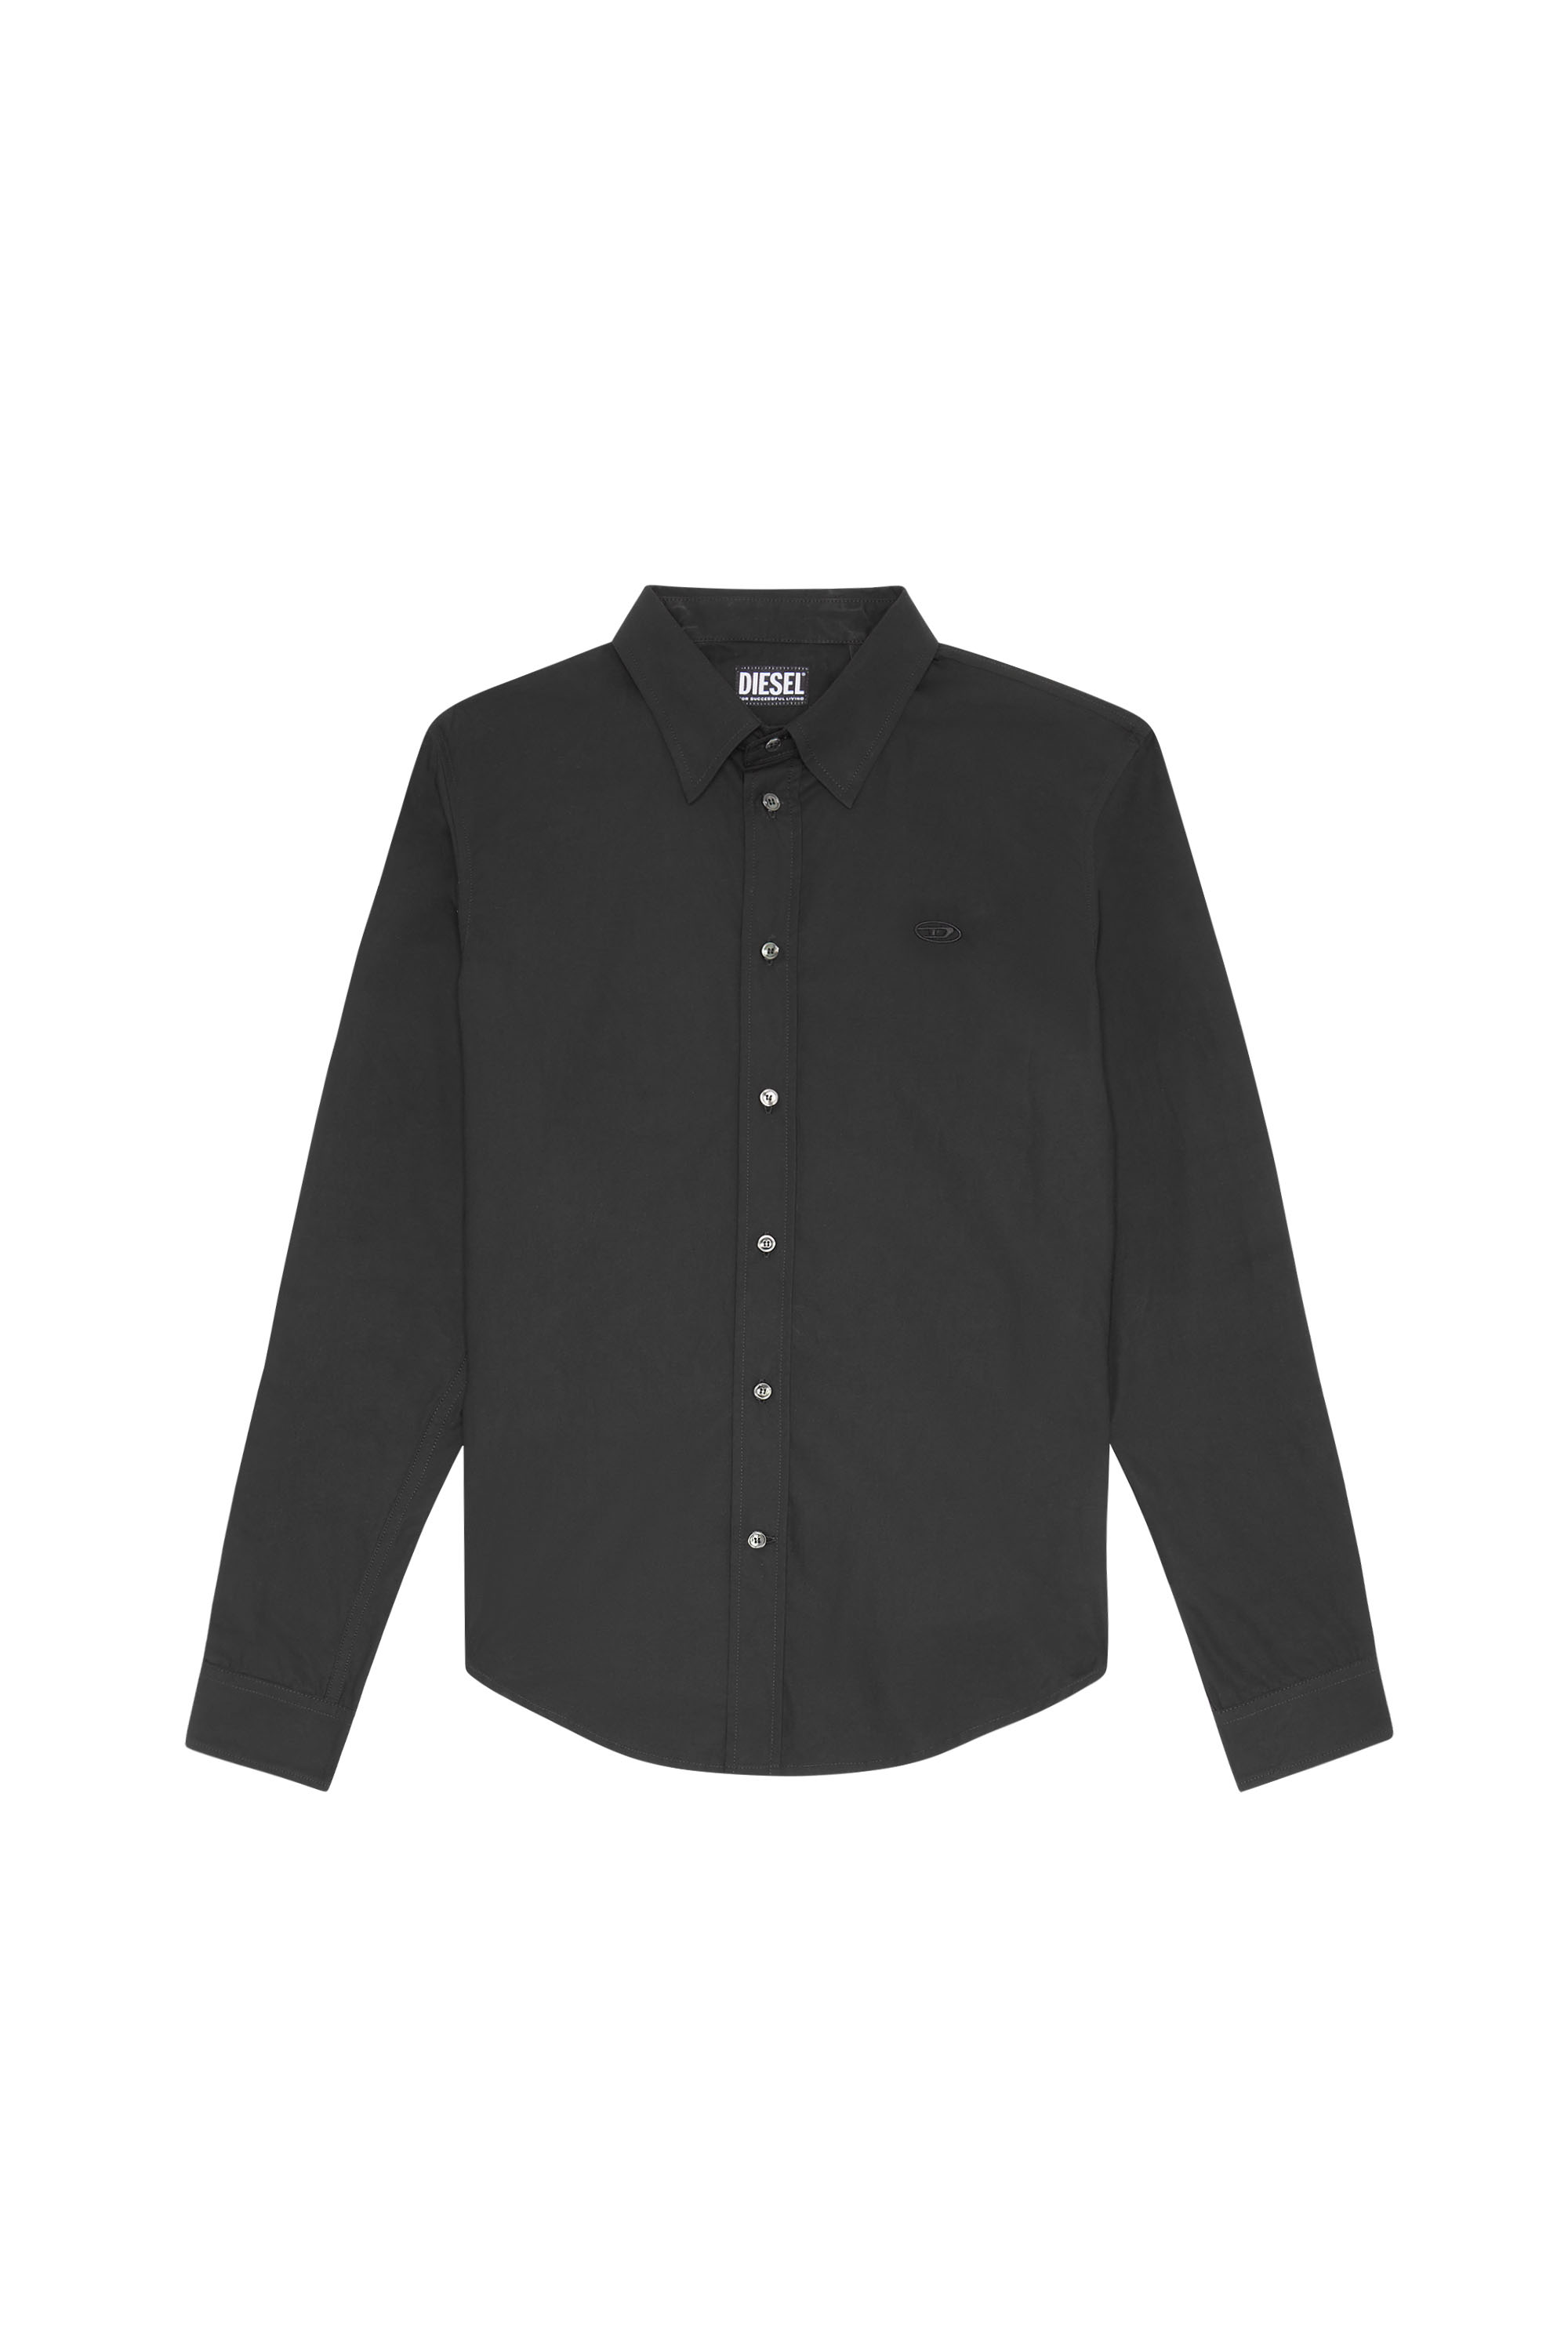 Diesel - S-BEN-CL, Man Shirt in technical cotton in Black - Image 3